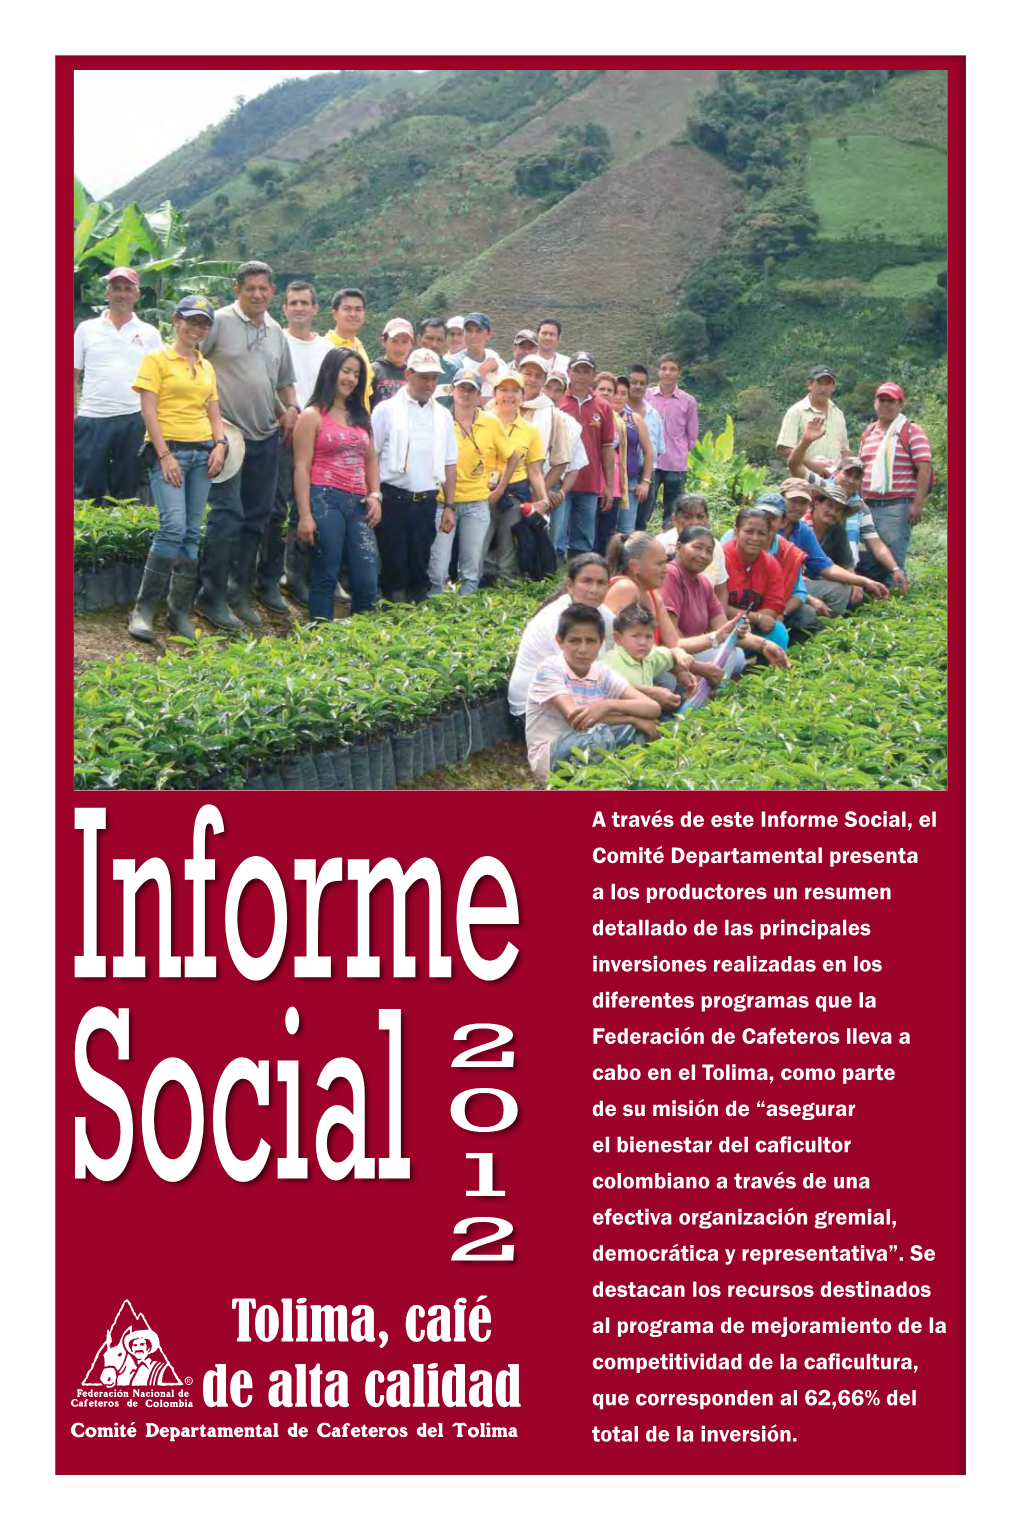 A Través De Este Informe Social, El Comité Departamental Presenta A